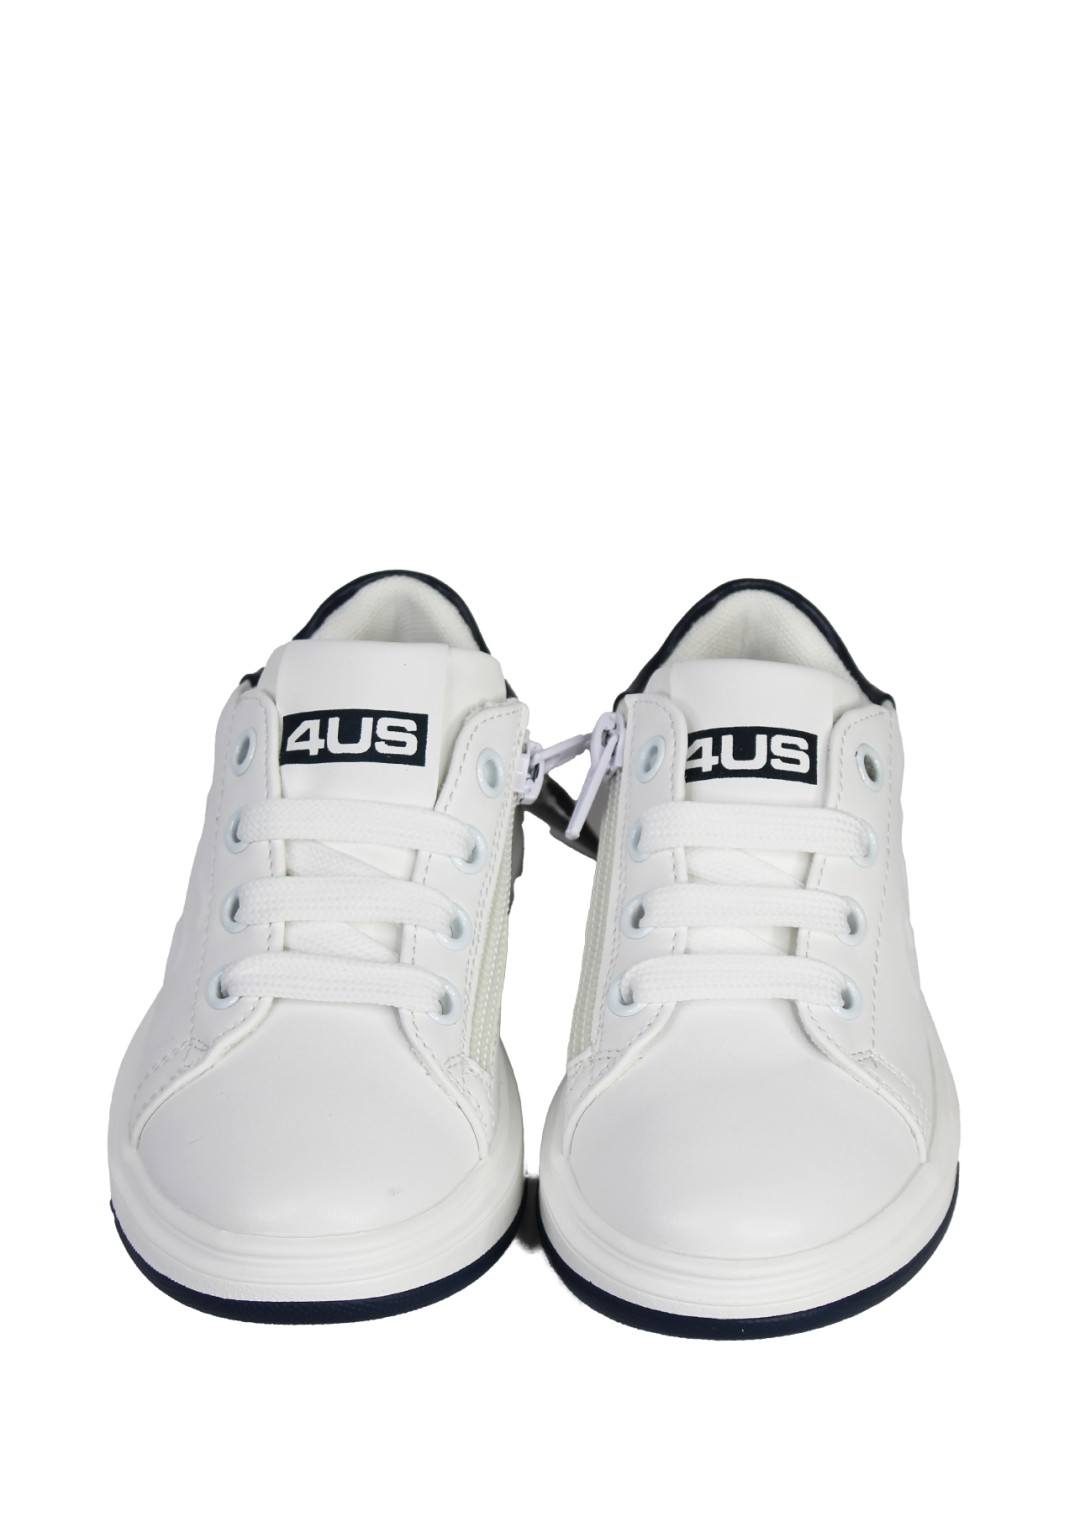 4US - Sneaker Logo - Bambini e ragazzi - 42700